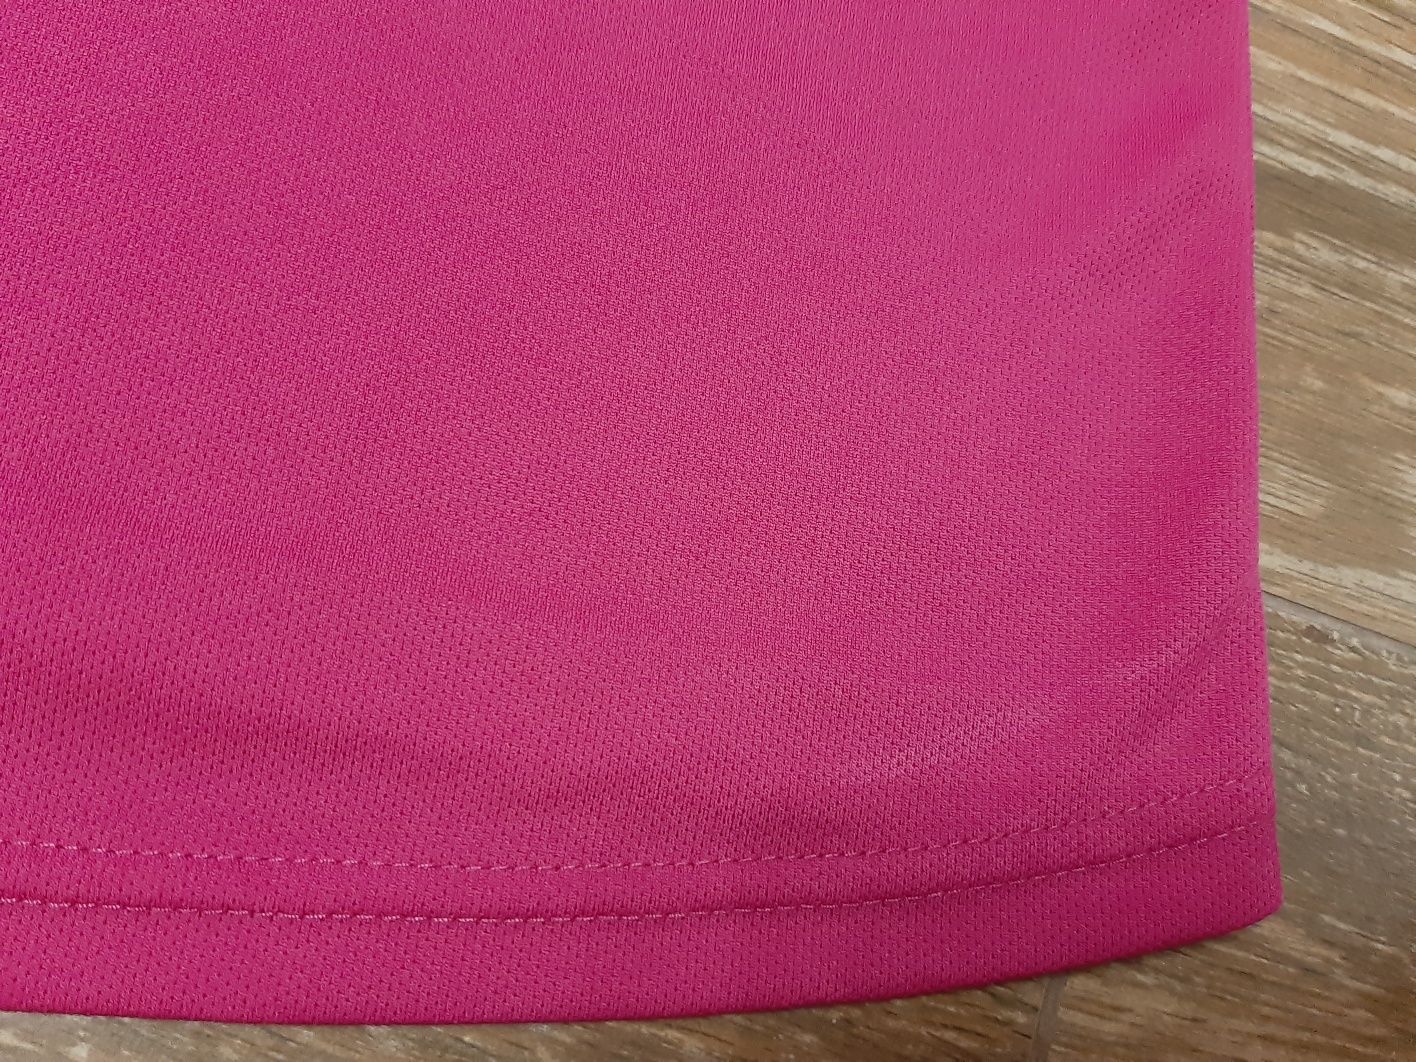 Bokserka koszulka stormberg rozmiar L różowa szybkoschnaca